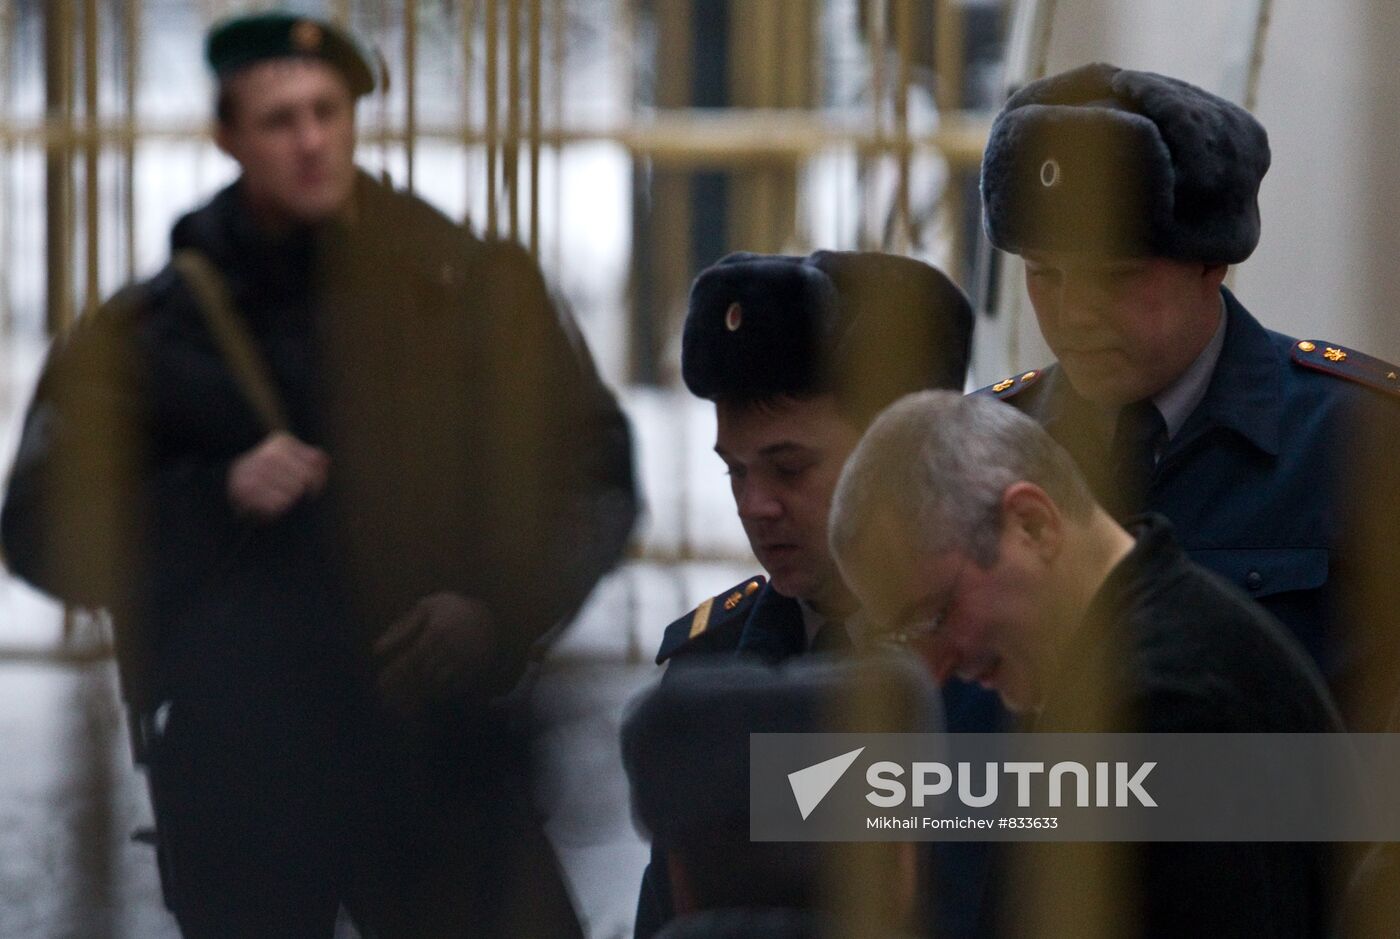 Announcement of verdict in Mikhail Khodorkovsky's case